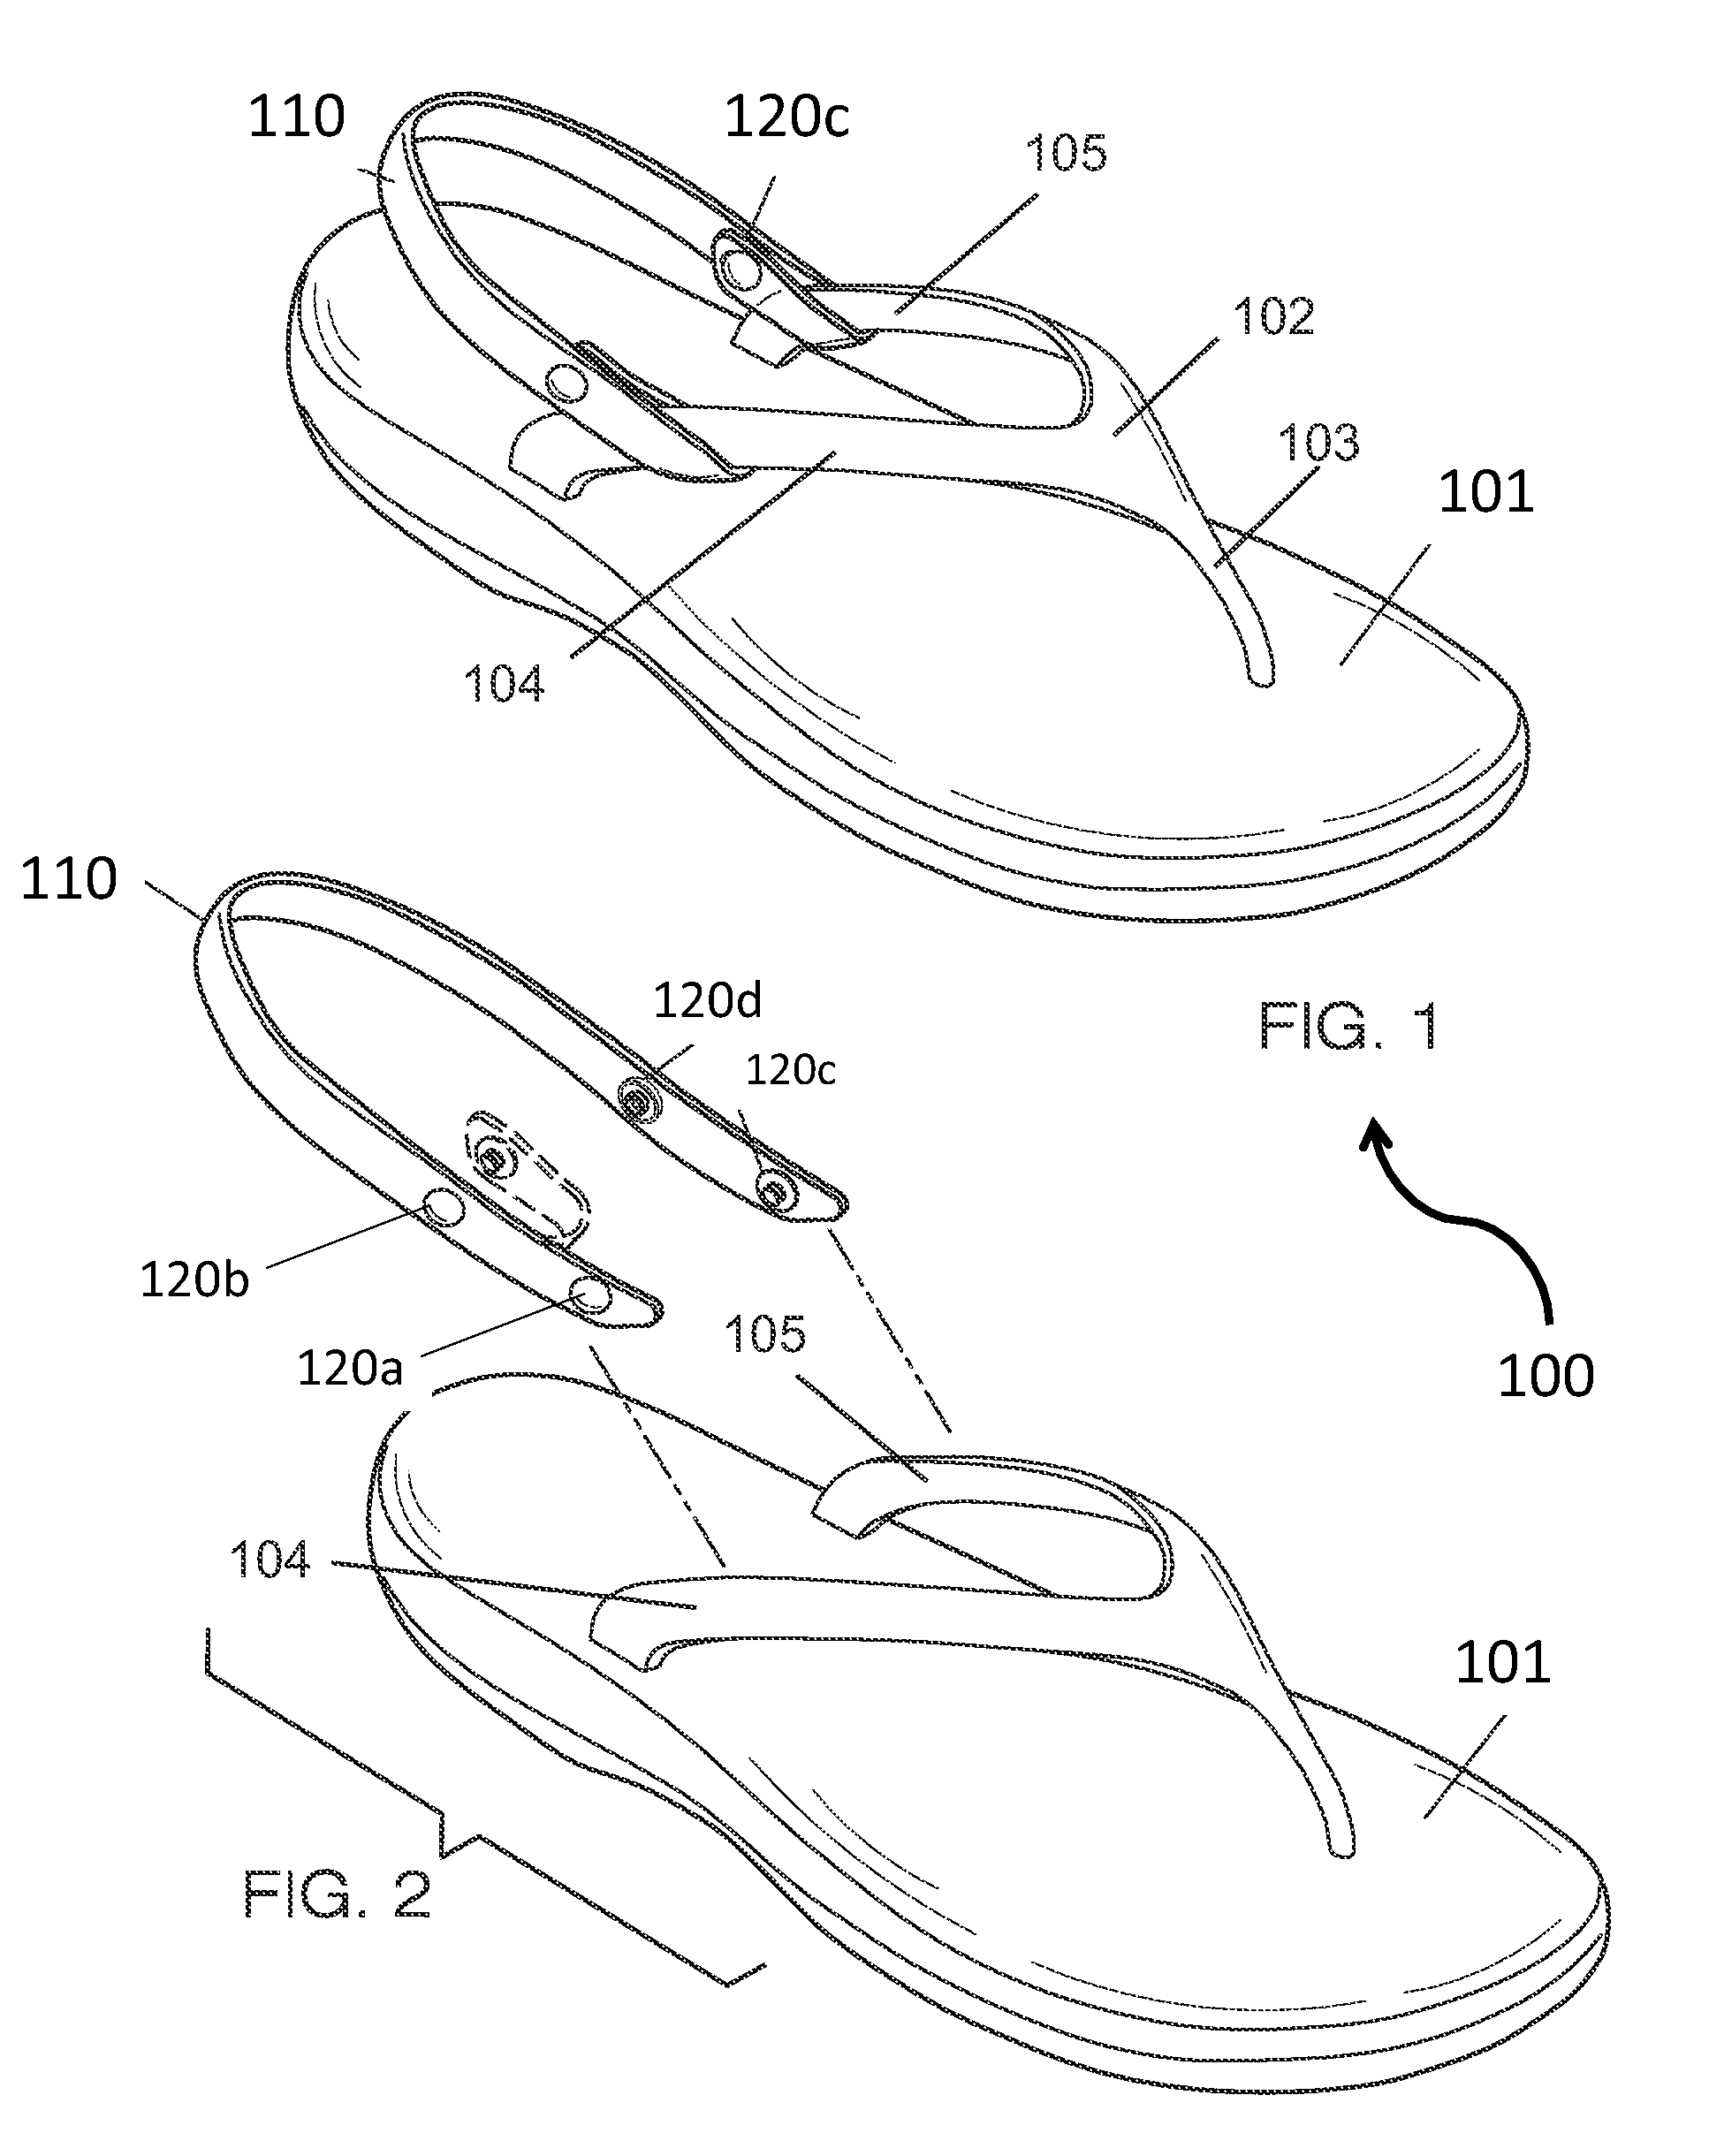 Flip-flop back strap device